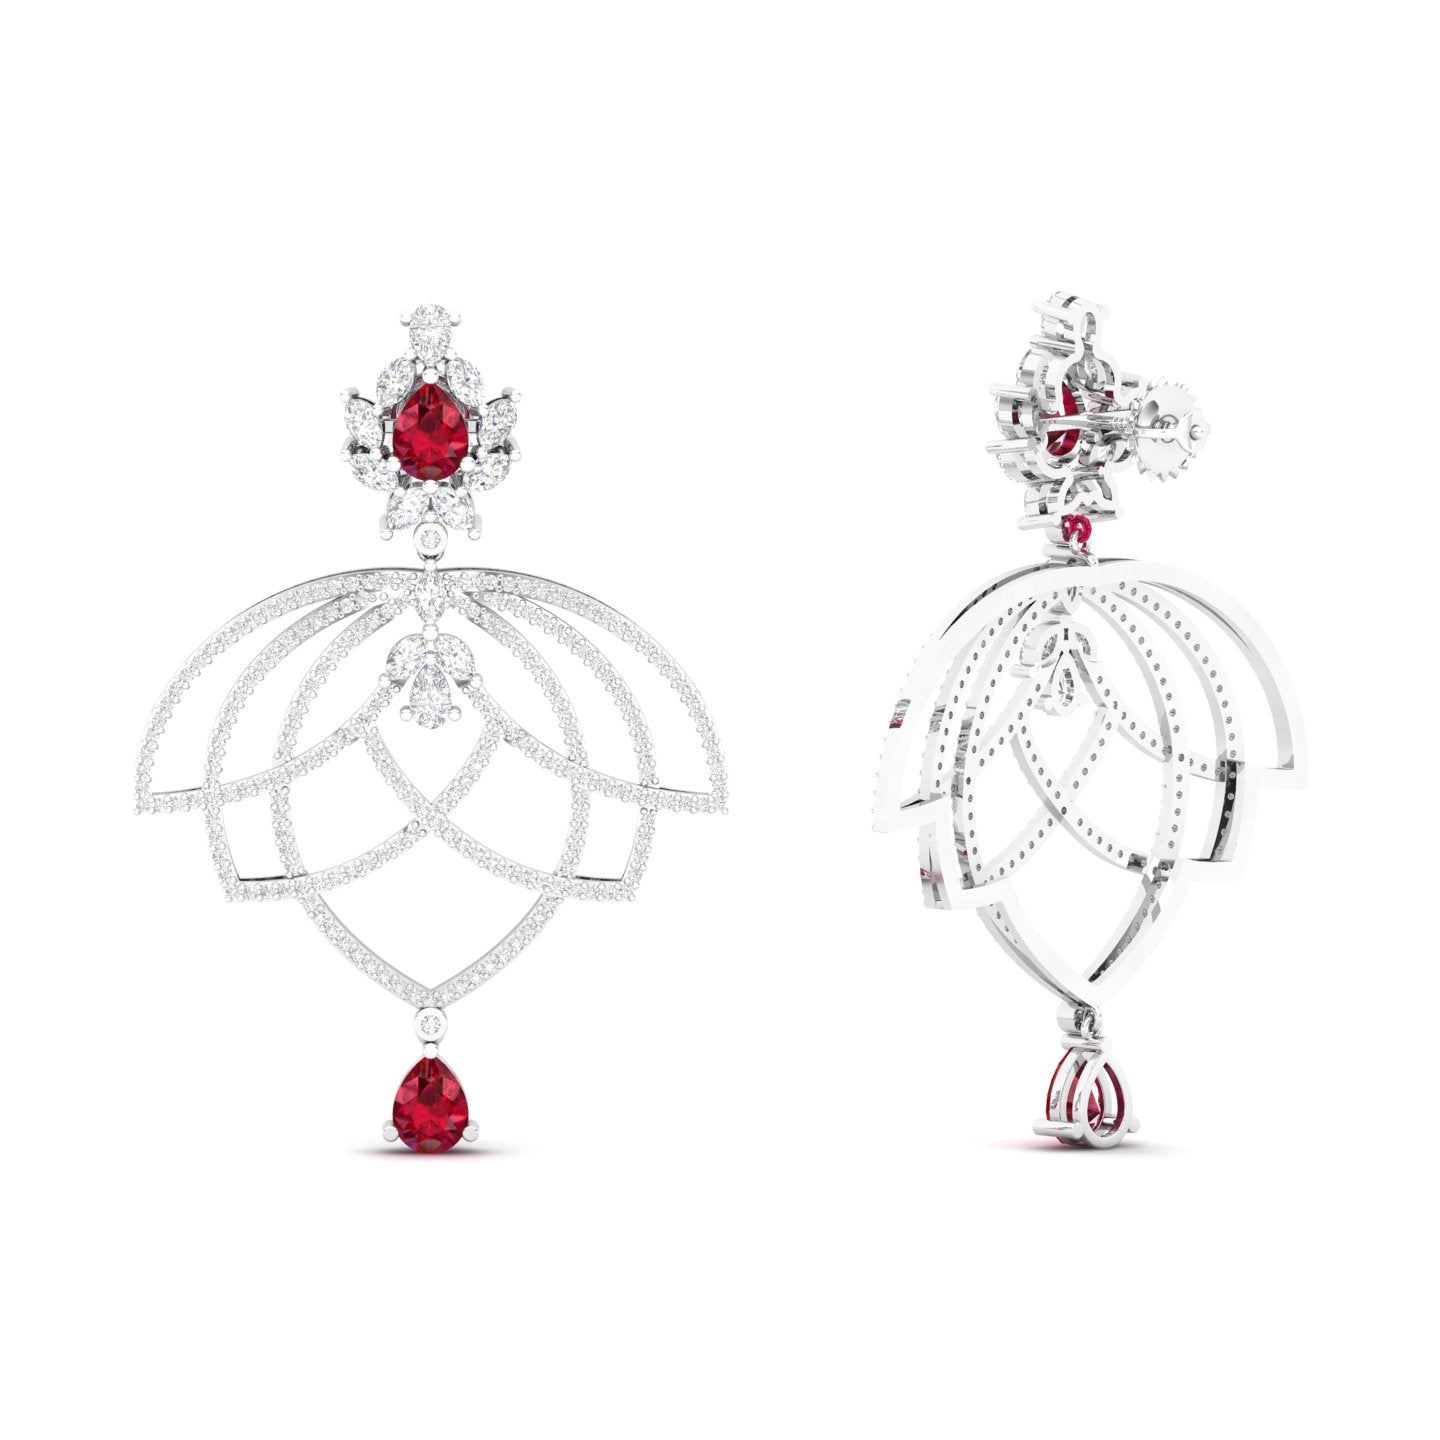 Maurya Peony Ruby Chandelier Drop Earrings with Pave-Set Diamonds